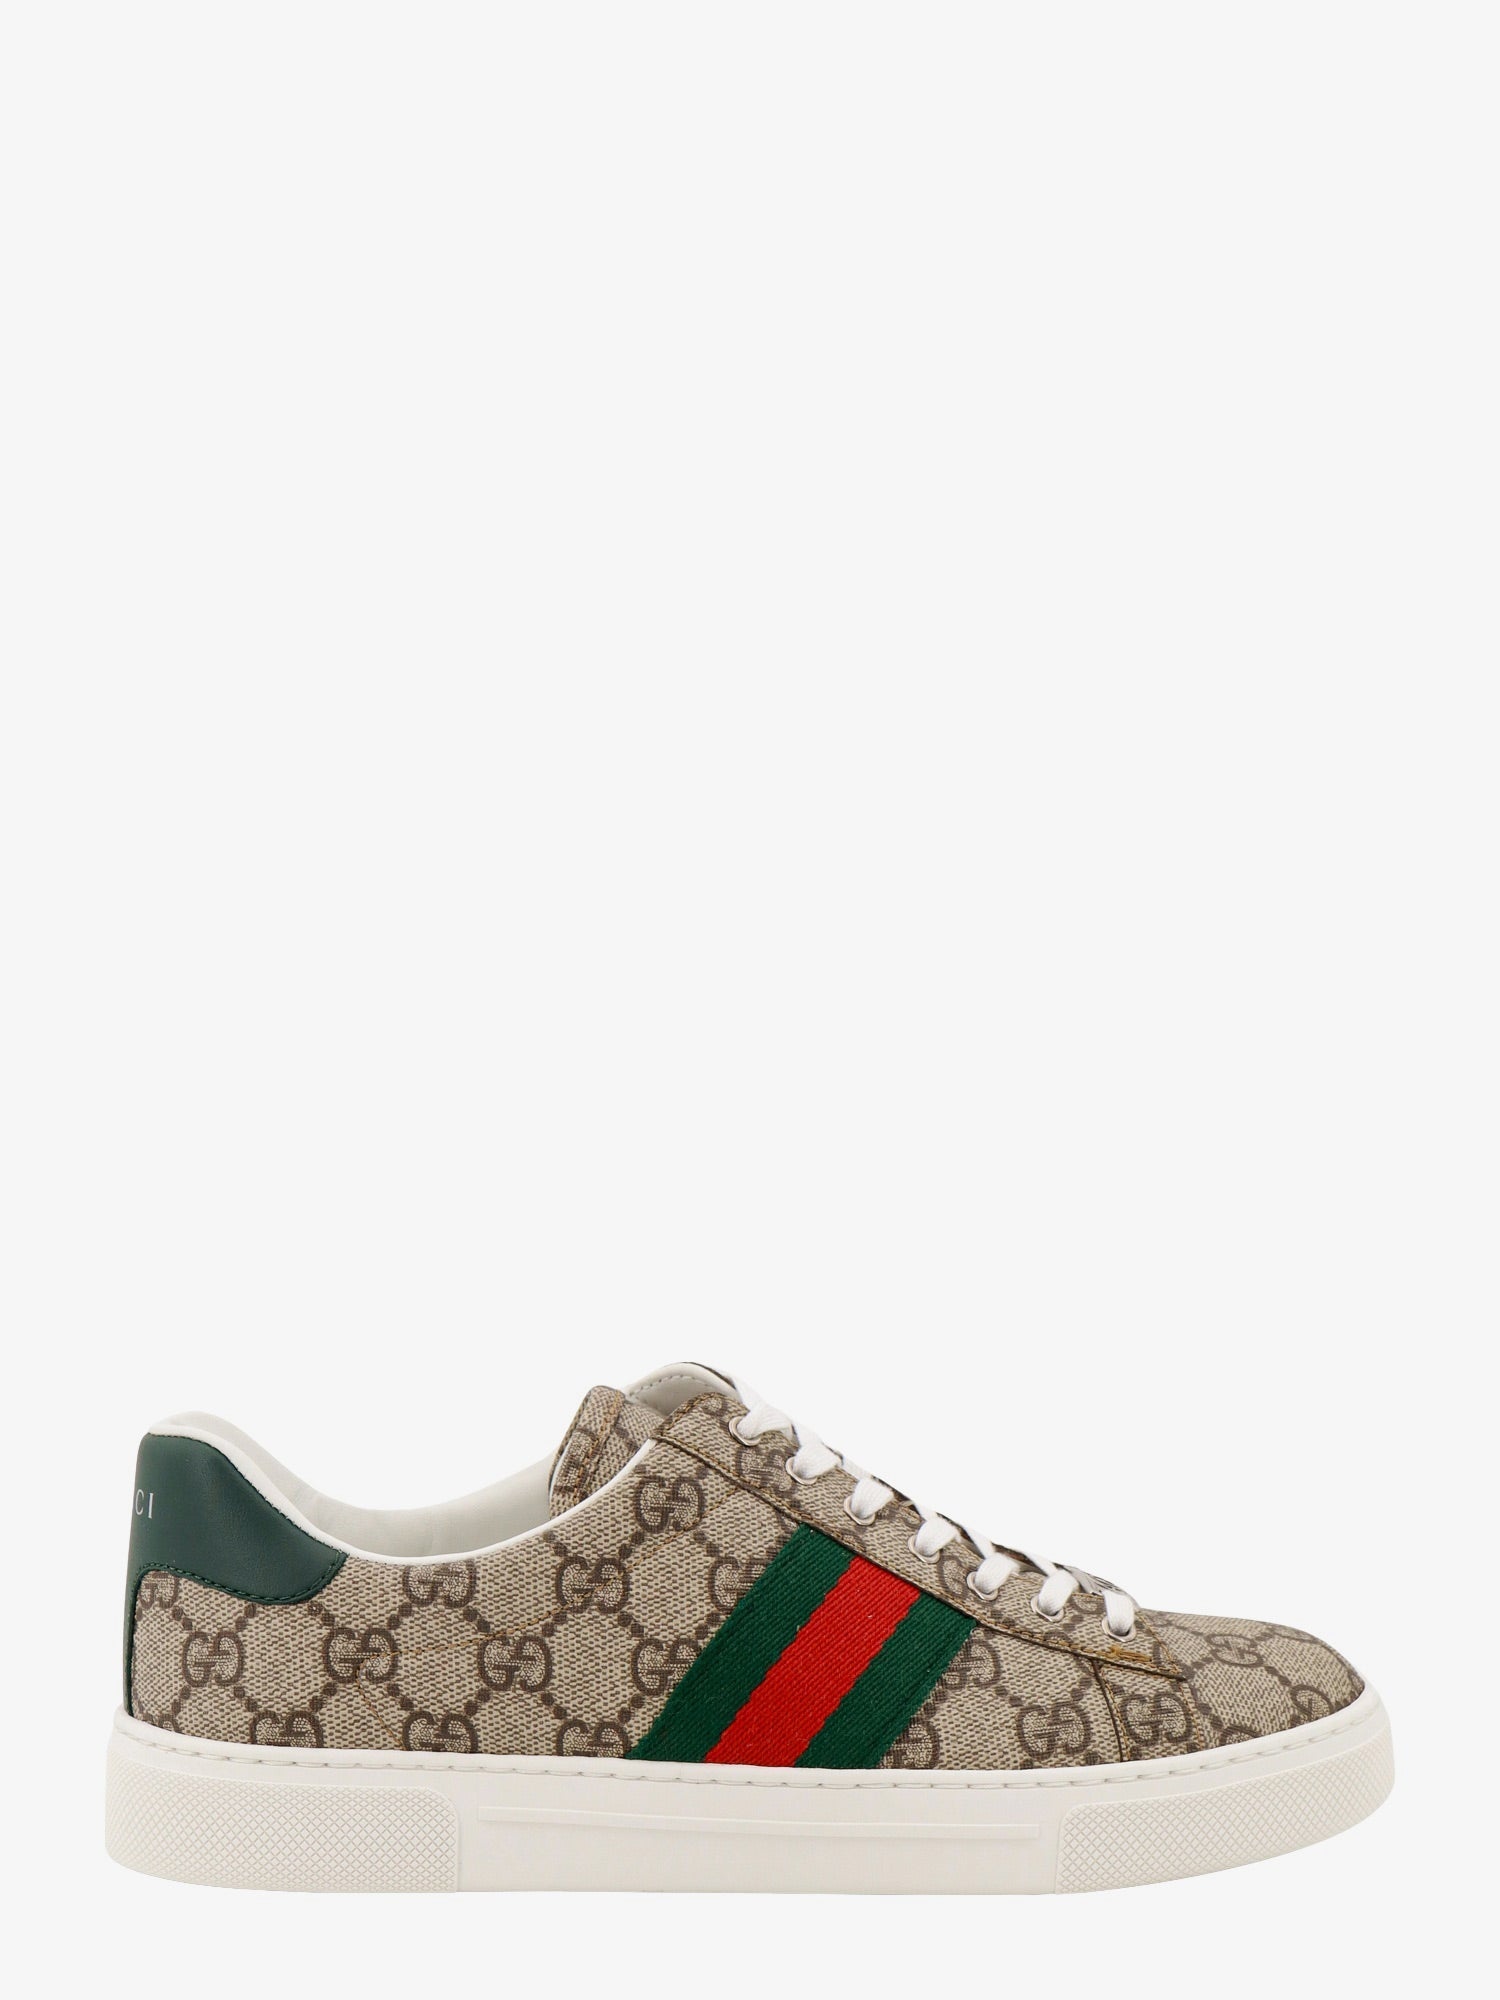 Gucci Woman Ace Woman Beige Sneakers - 1